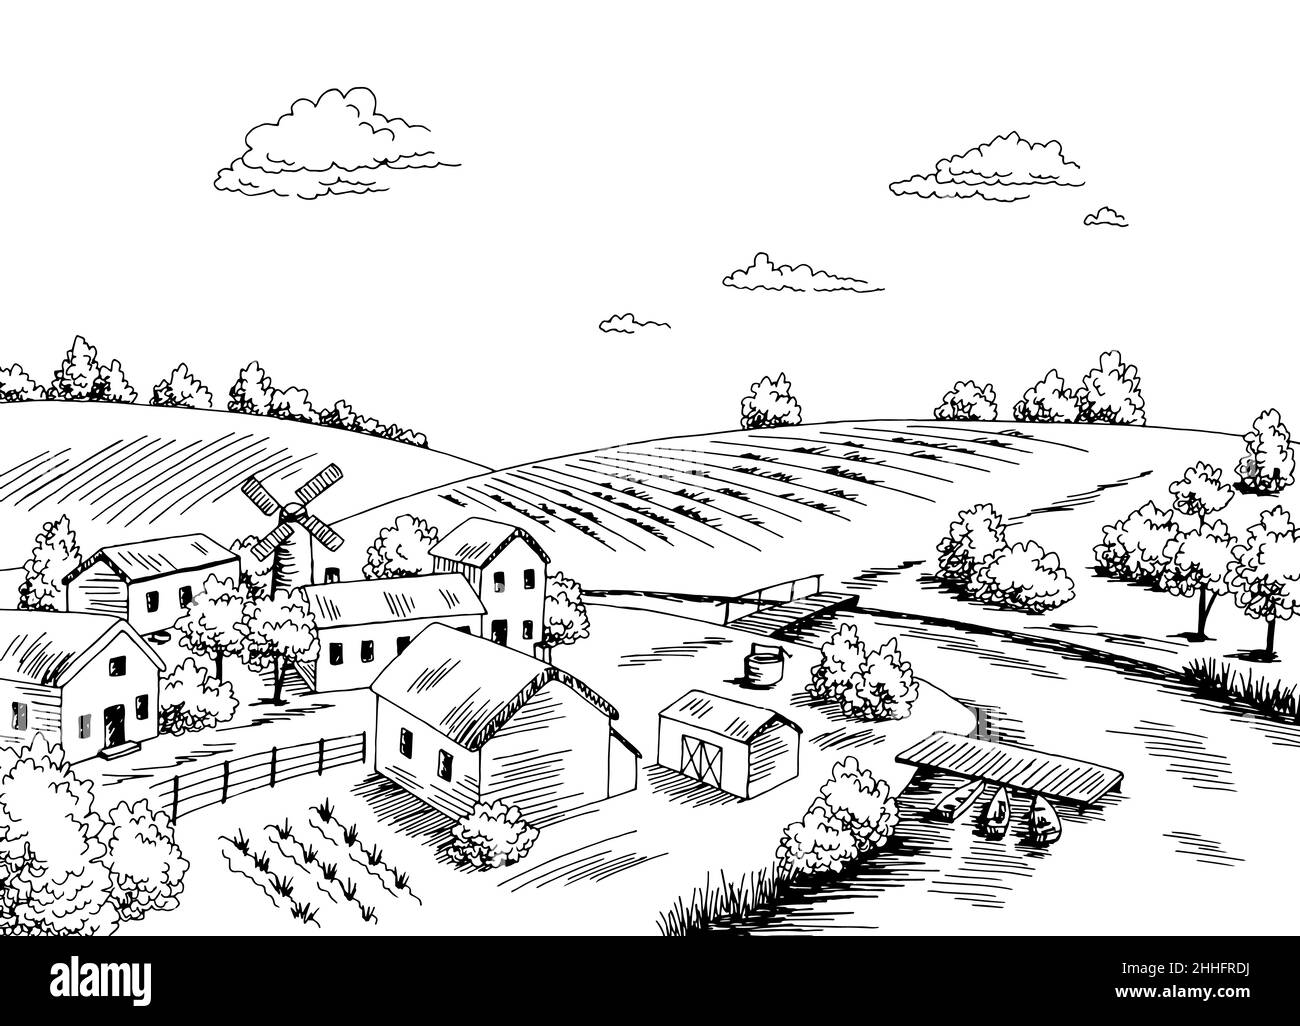 Village river graphic black white rural landscape sketch illustration vector Stock Vector